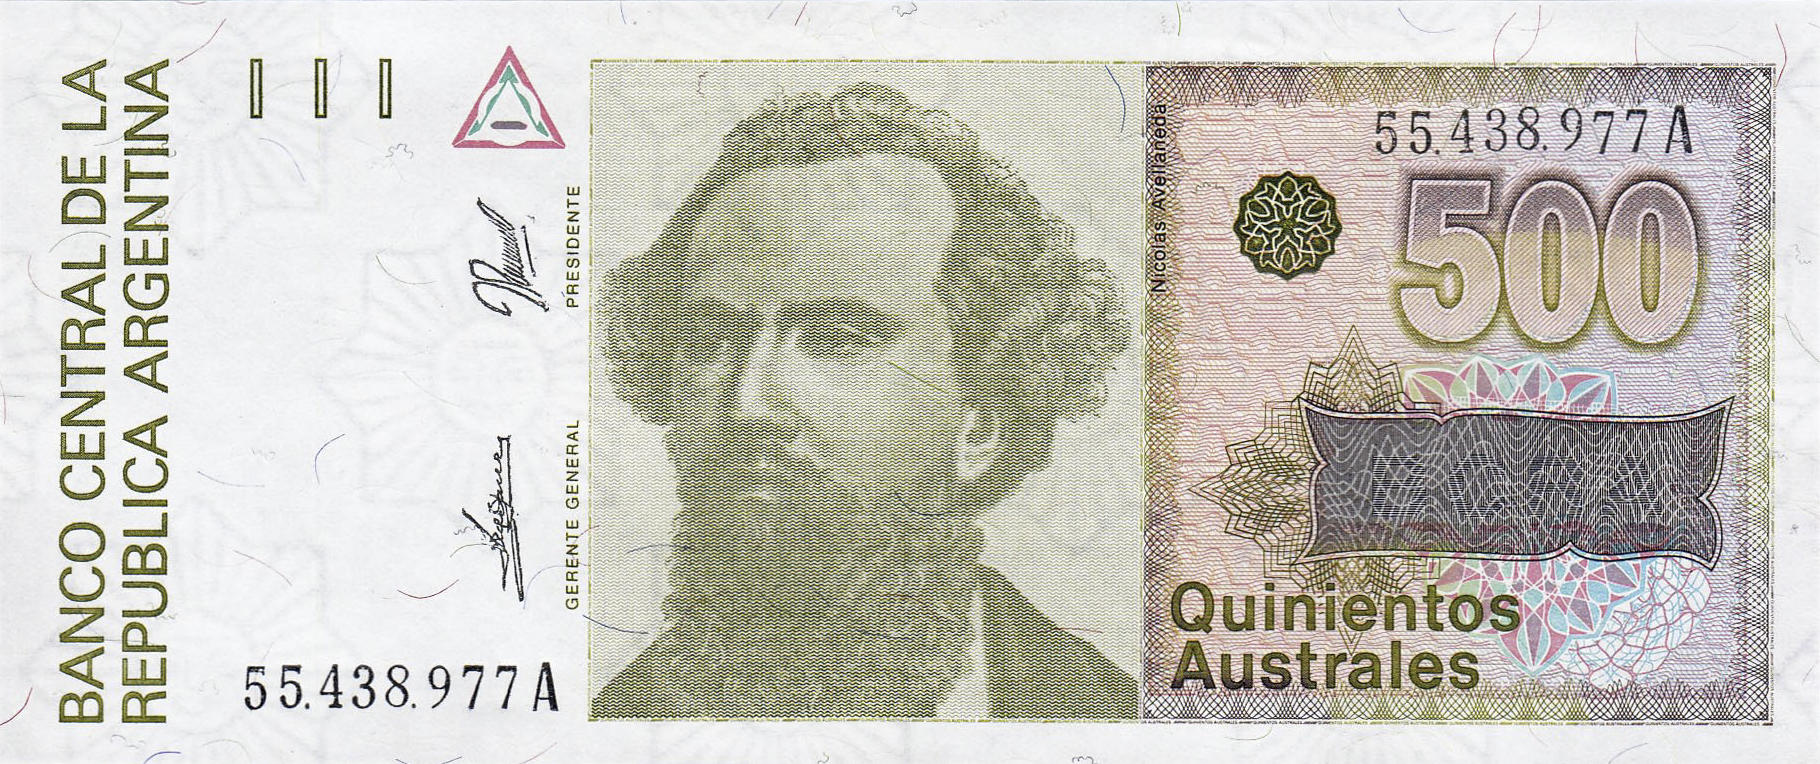 Банкнота Аргентина 500 аустралей 1986 года, модификация A, лицевая сторона (ARA-1986A-R500-S072-GW0-V2-P.A, TBB: B381b, WPM: P328b)